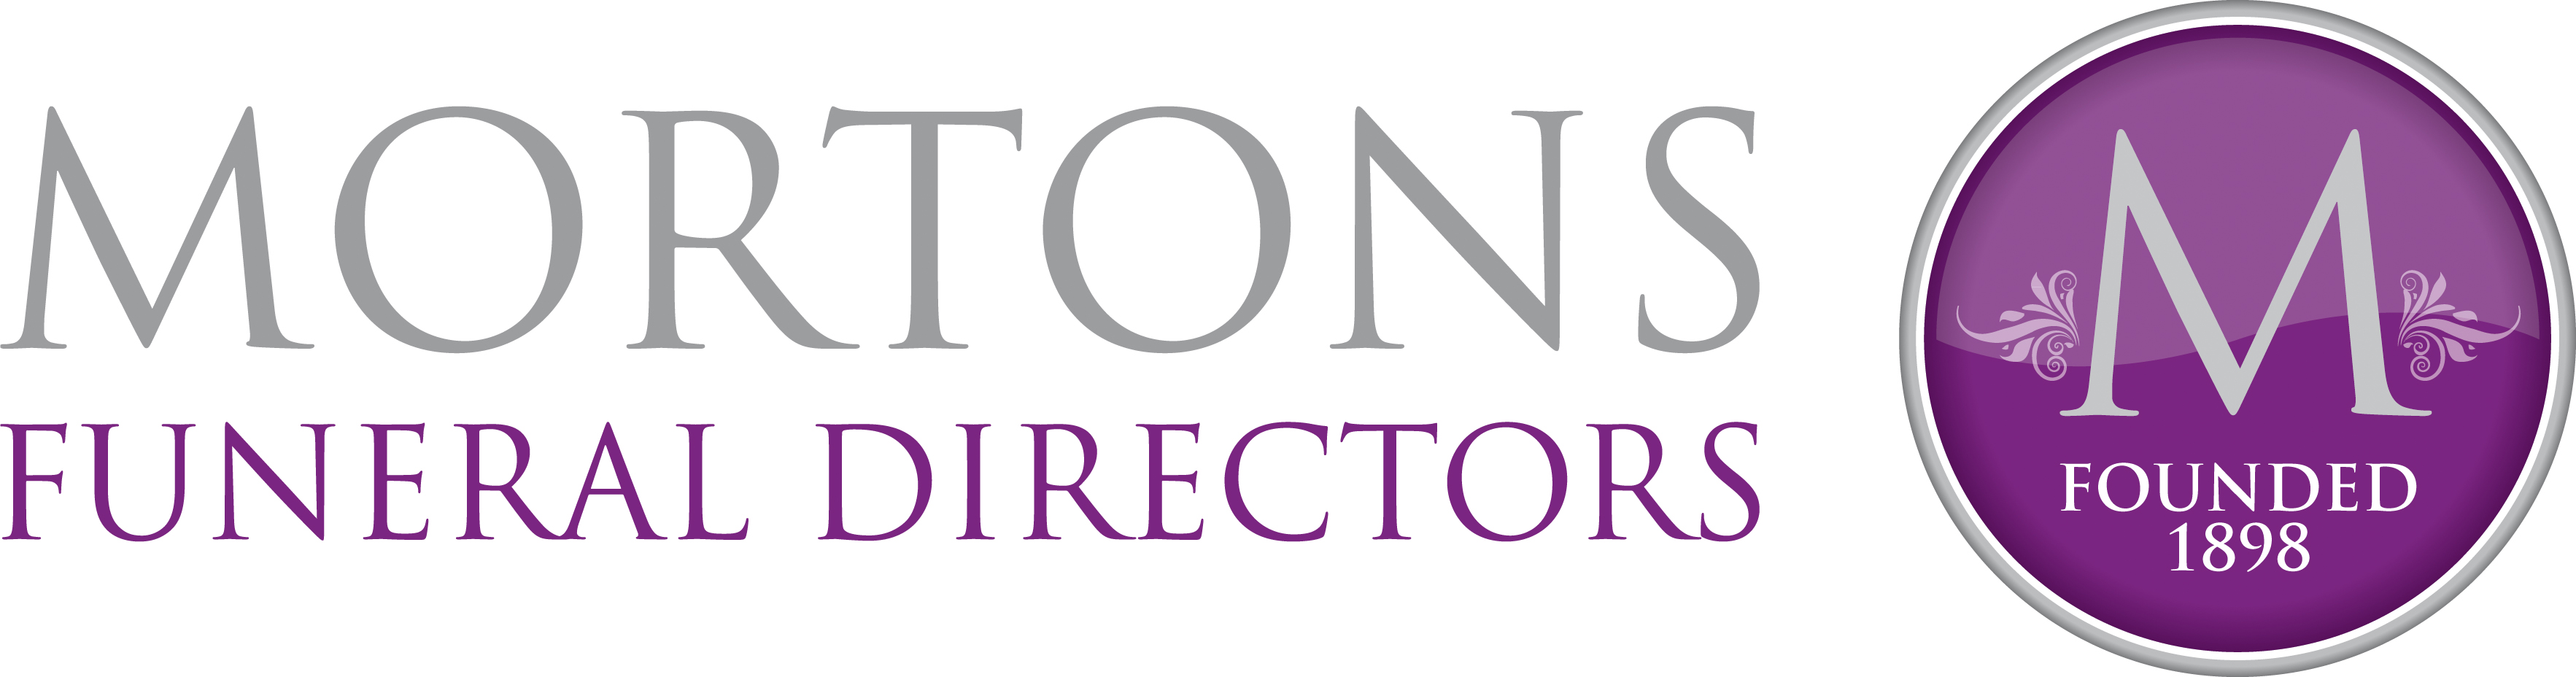 logo for Mortons Funeral Directors